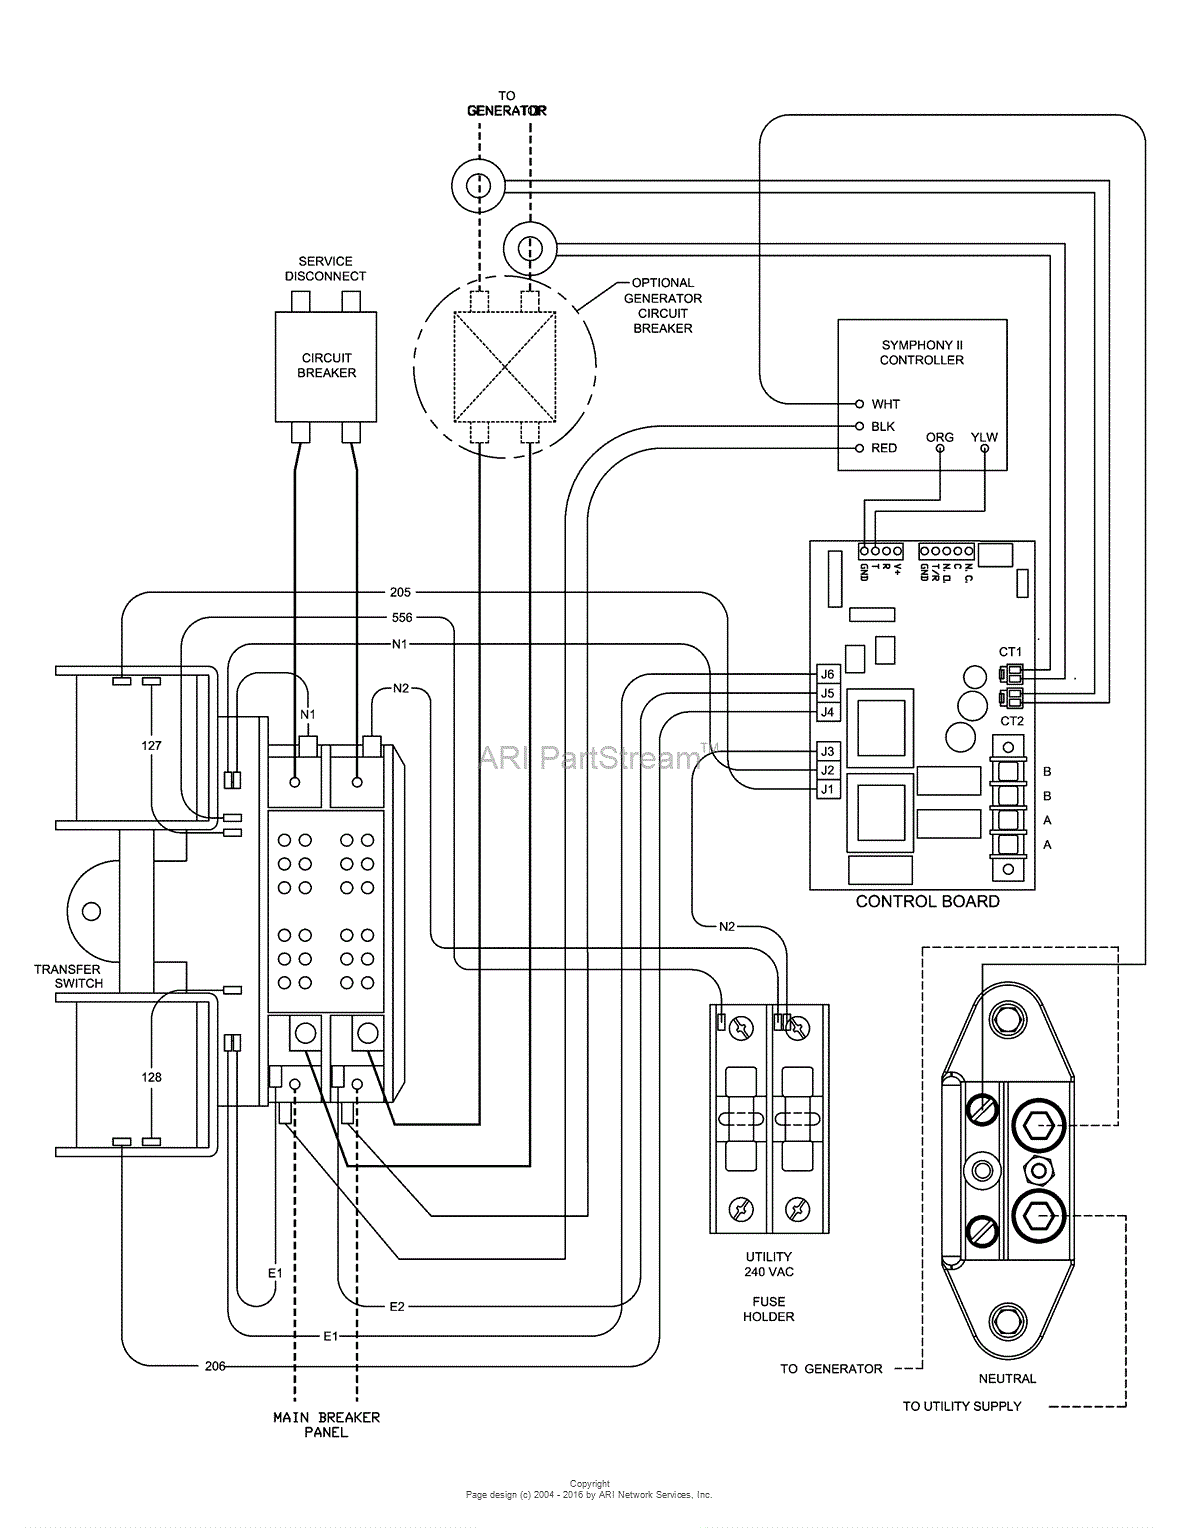 Generac 50 Amp Automatic Transfer Switch Wiring Diagram from az417944.vo.msecnd.net